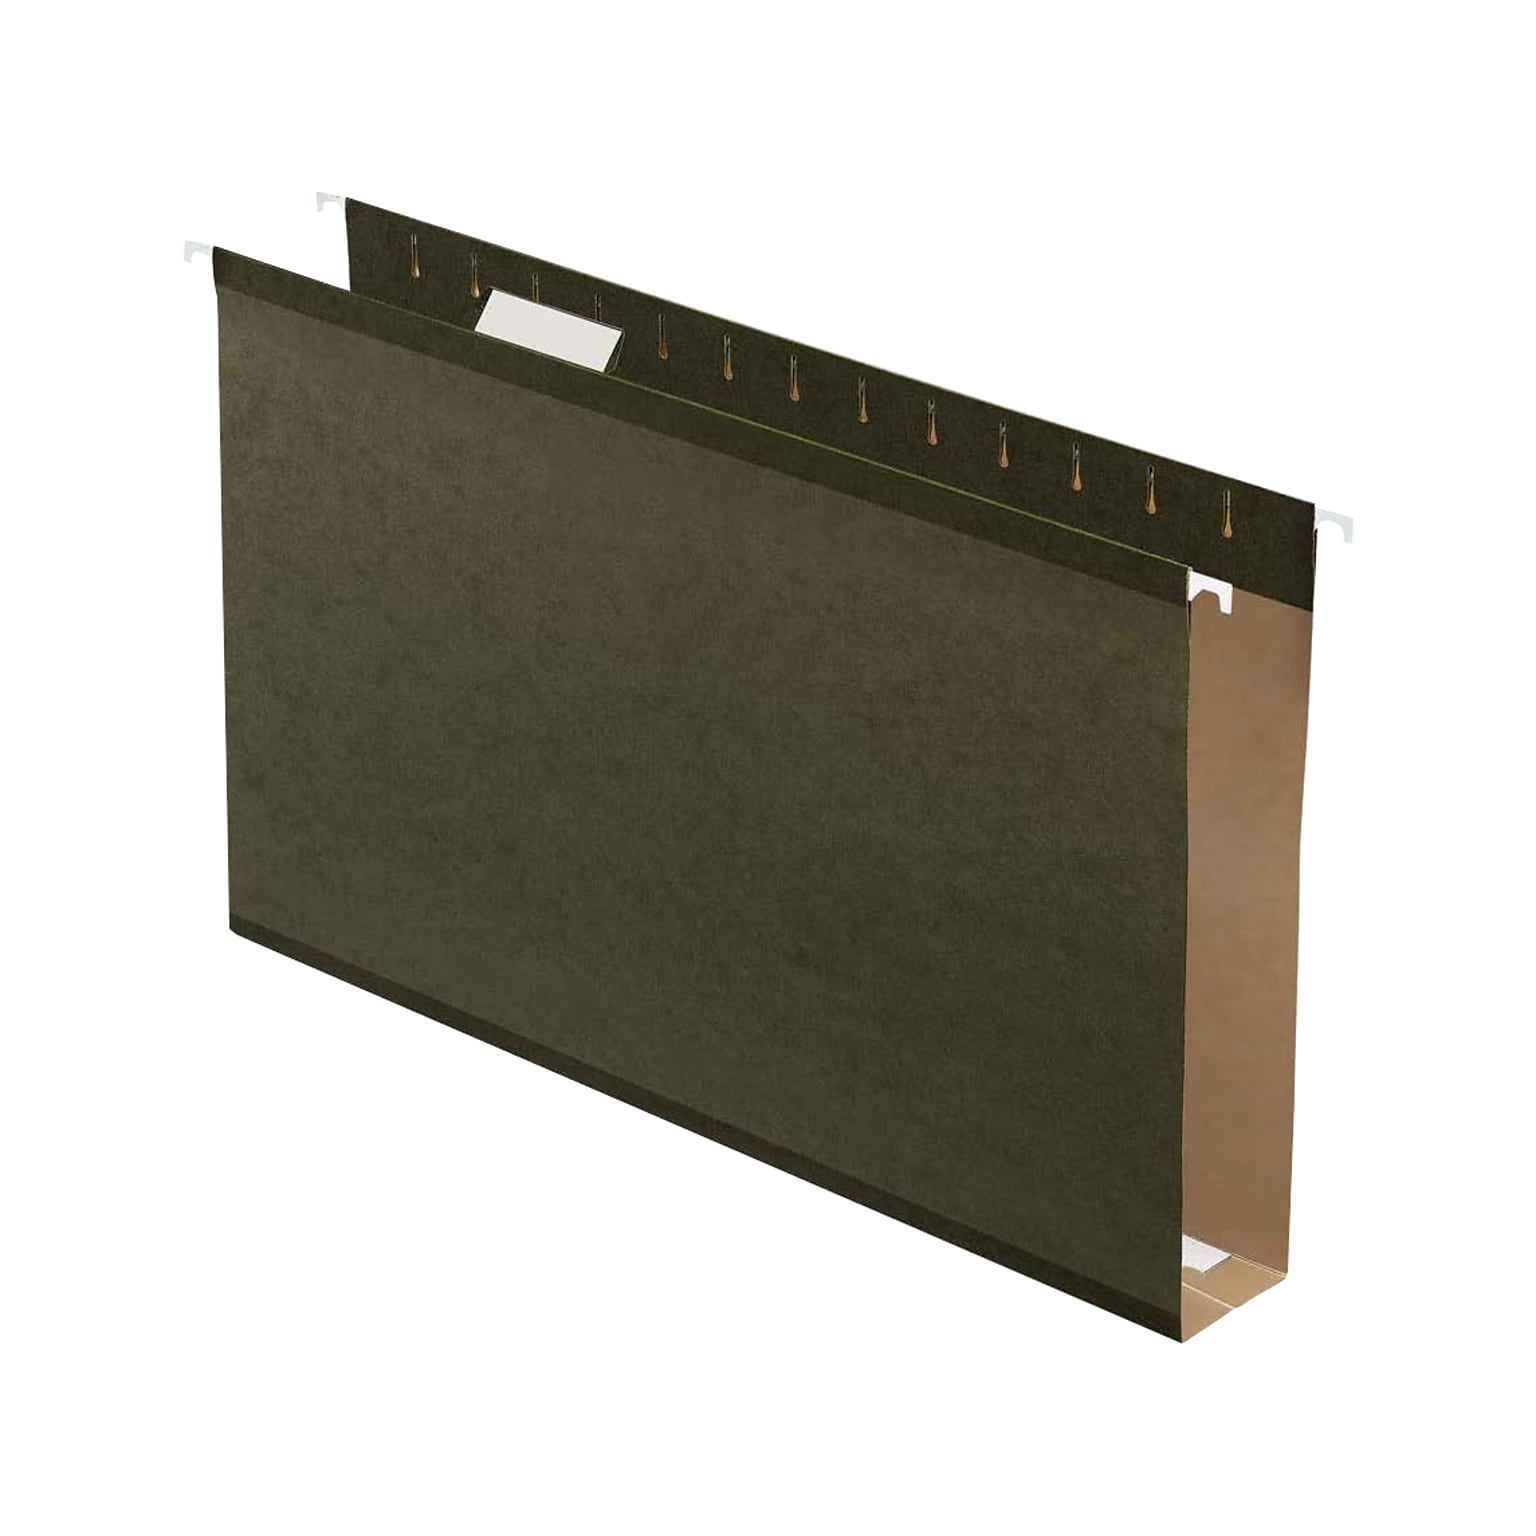 Pendaflex Reinforced Recycled Hanging File Folder, 1/5 Cut, Legal Size, Standard Green, 25/Box (PFX 5143x2)